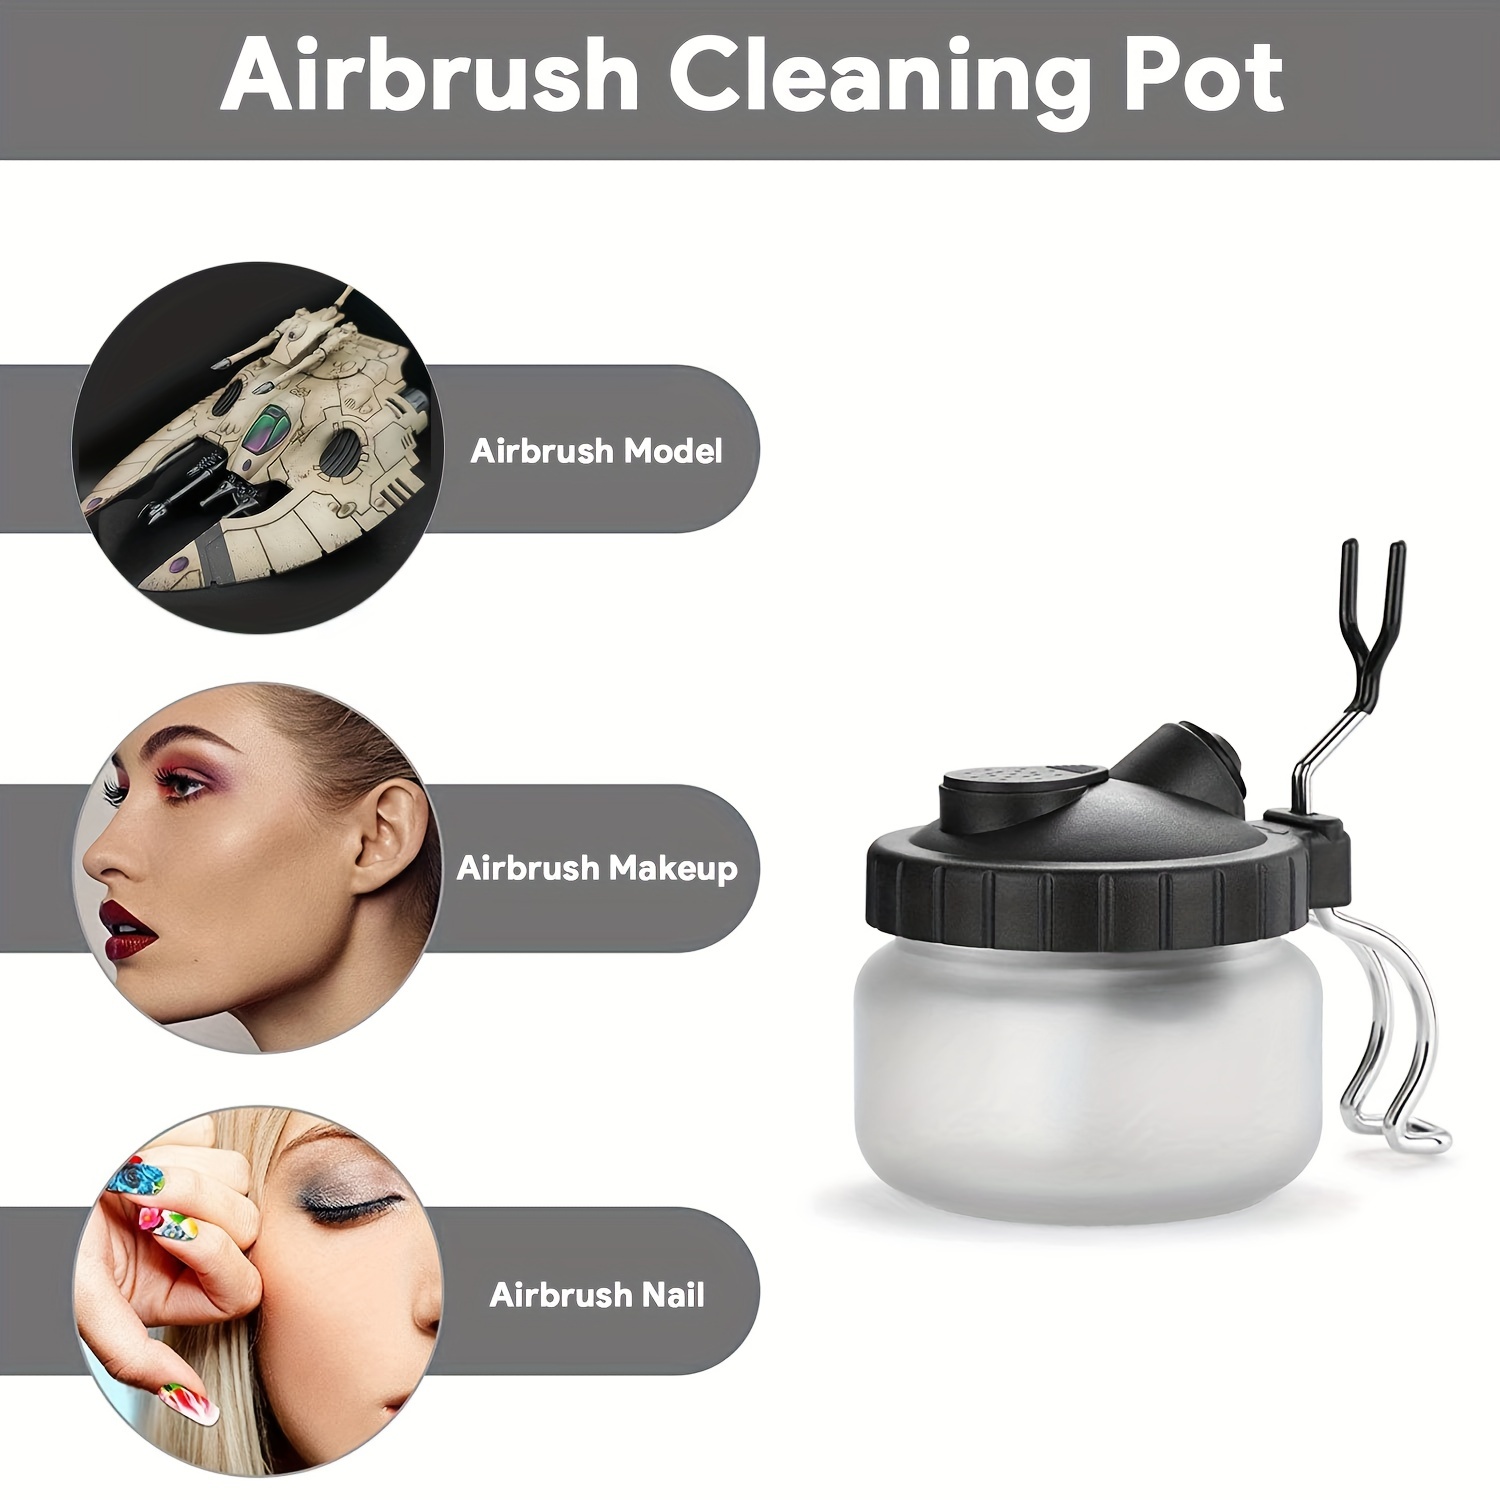 Airbrush cleaning pot by JPN_FI